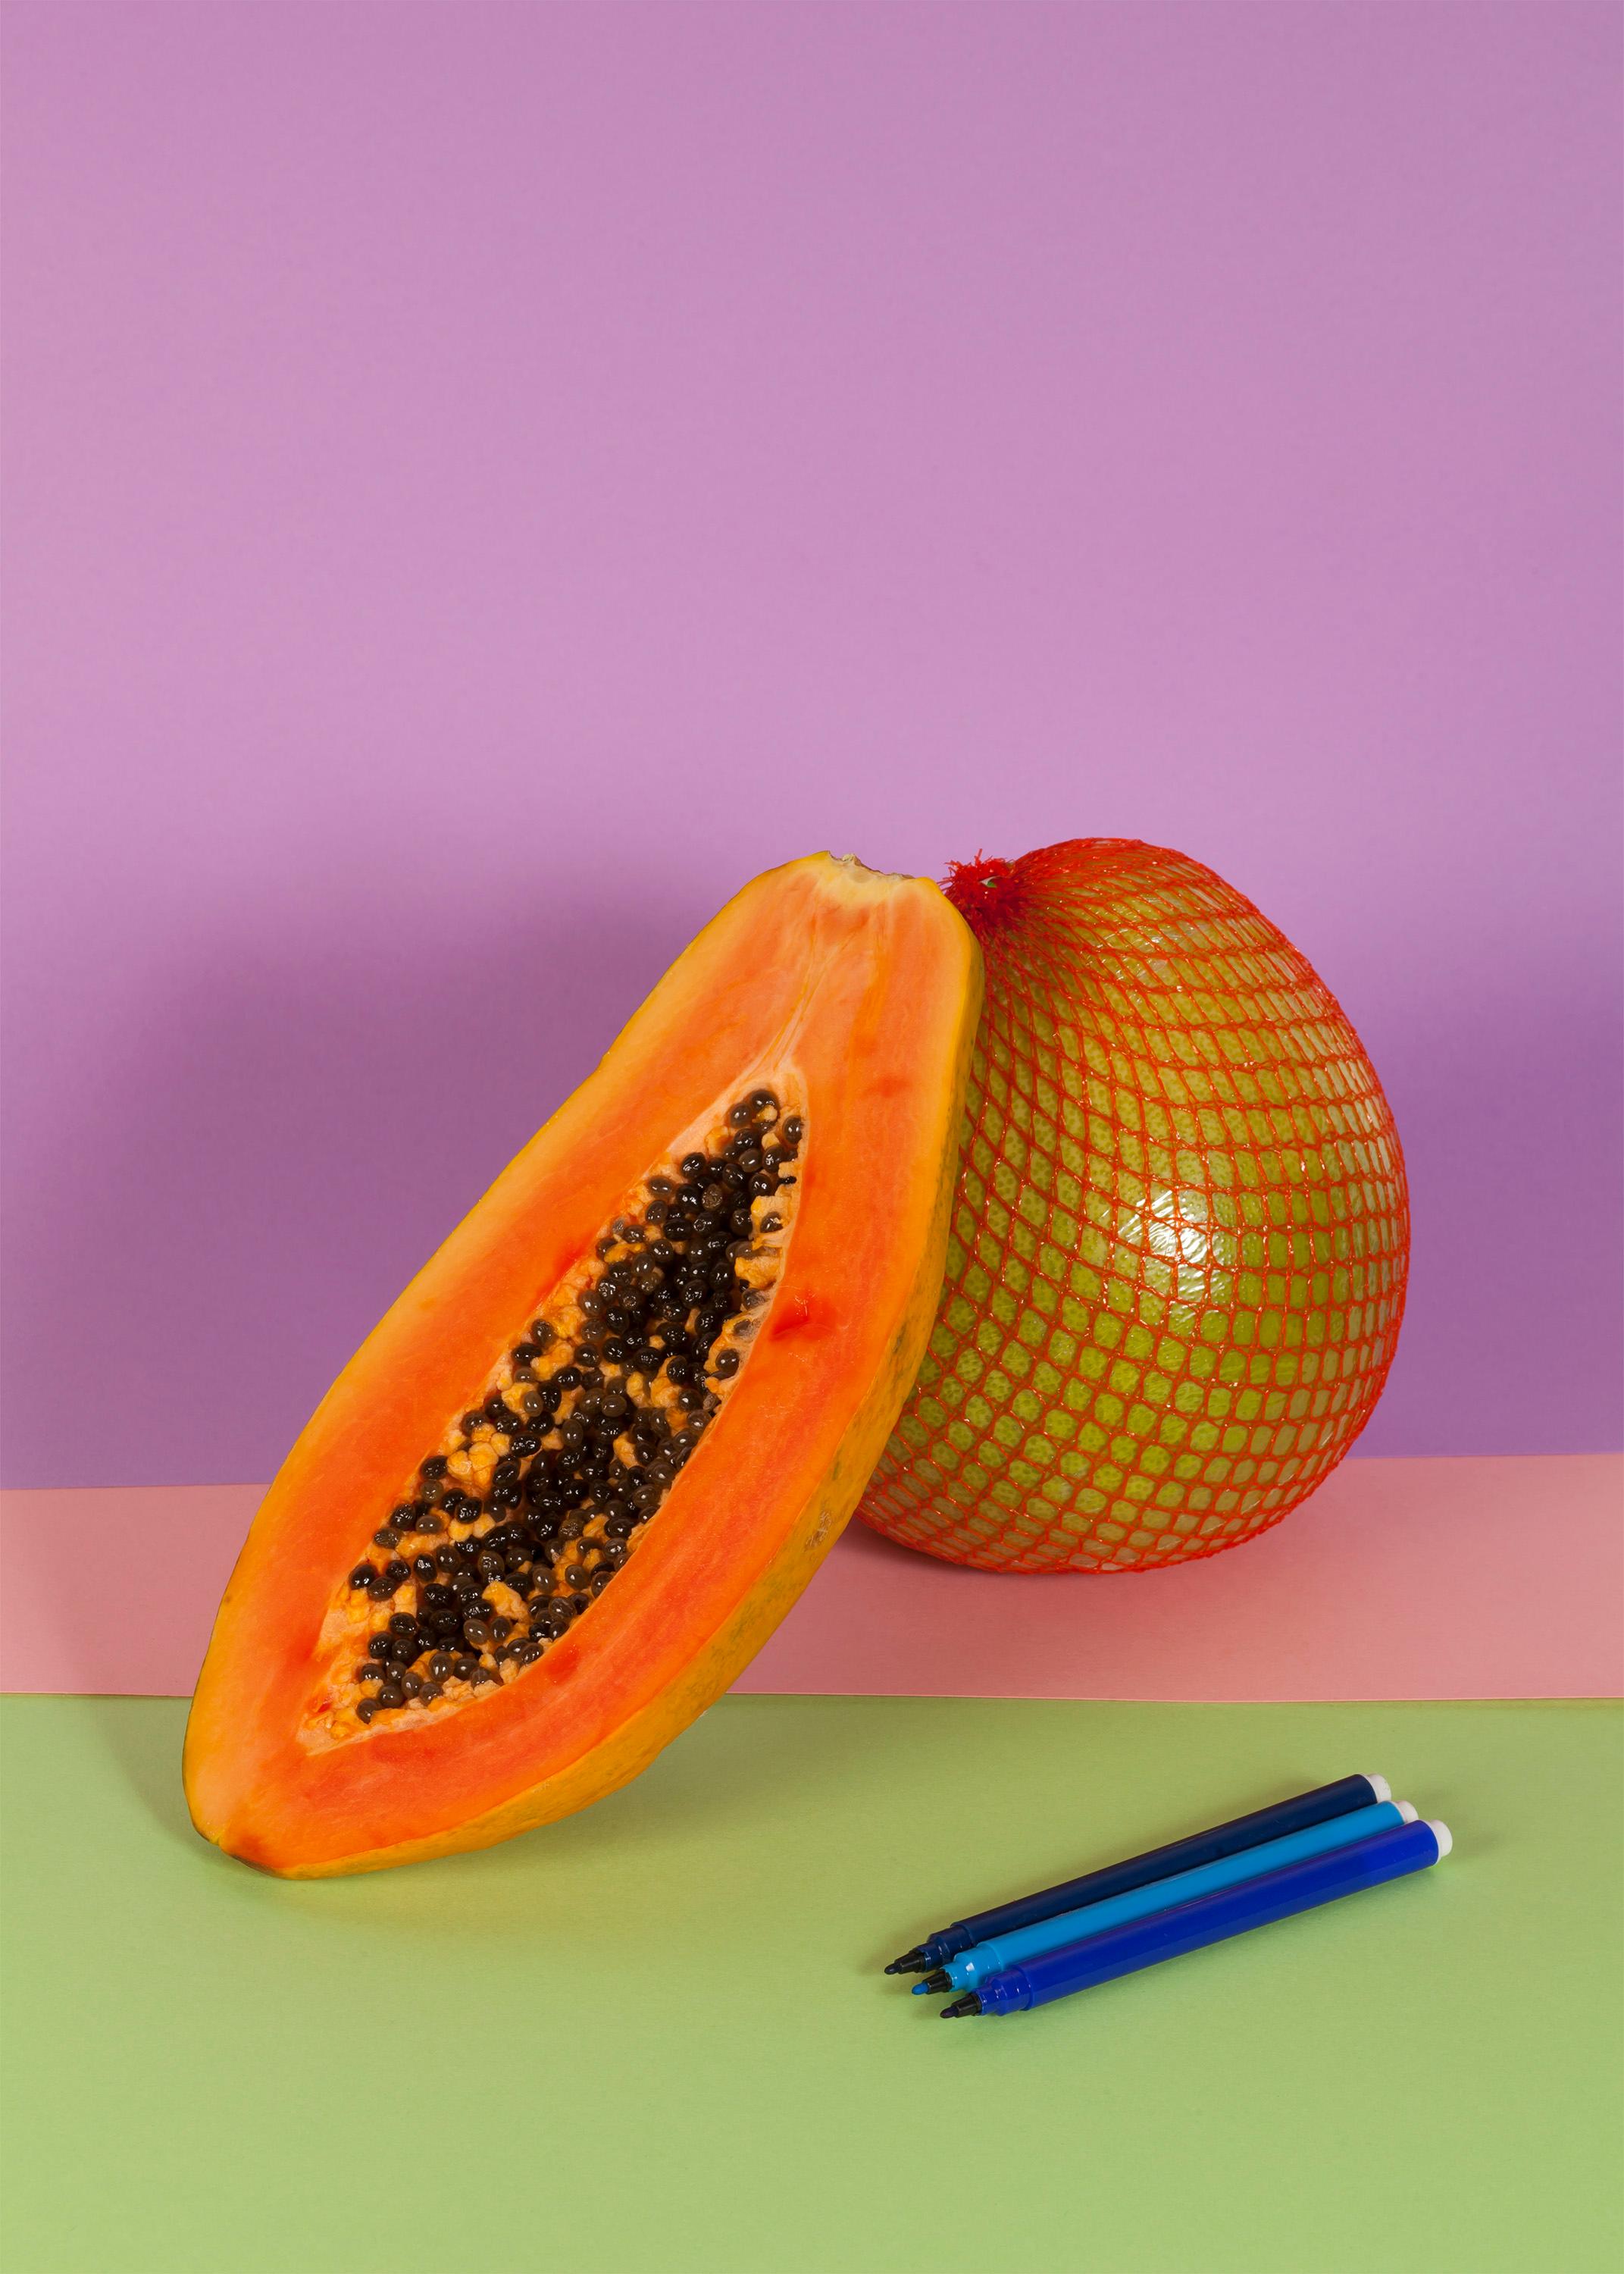 Burnt Orange Papaya, Contemporary Still Life, Tropical Fruits, Exotic Fruit   